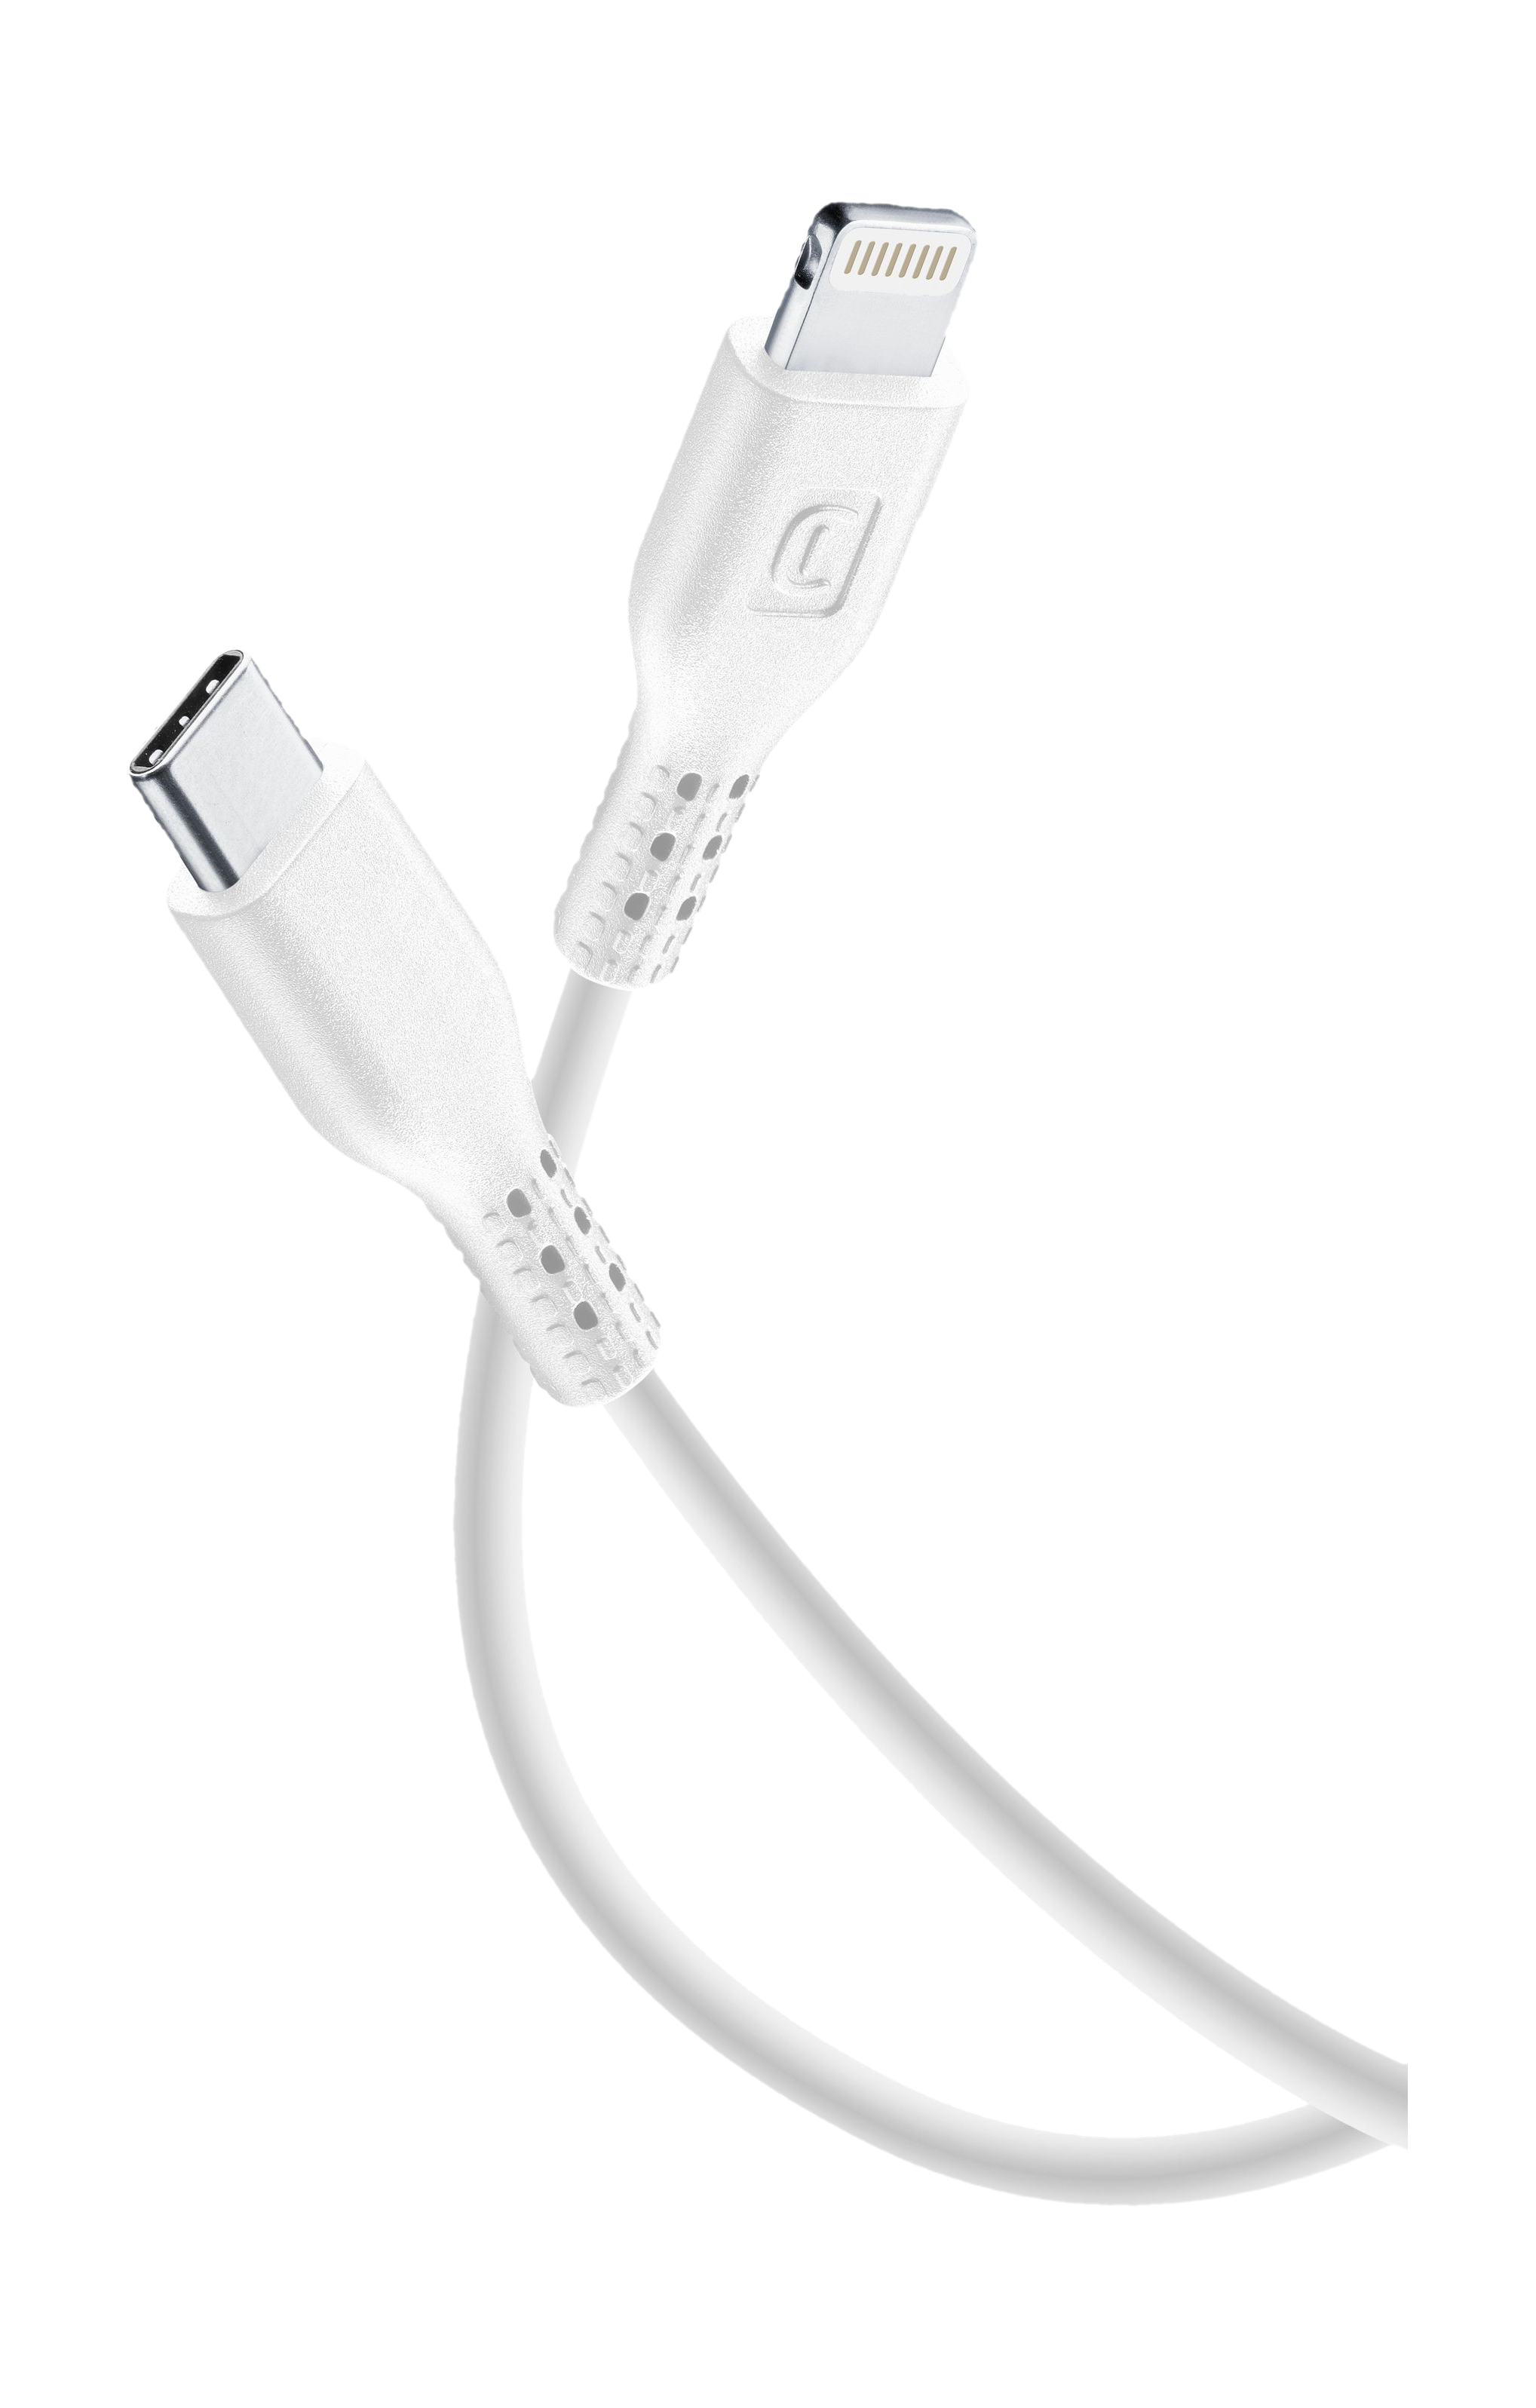 CELLULAR LINE USB-C to Lightning - Cavo dati (White)